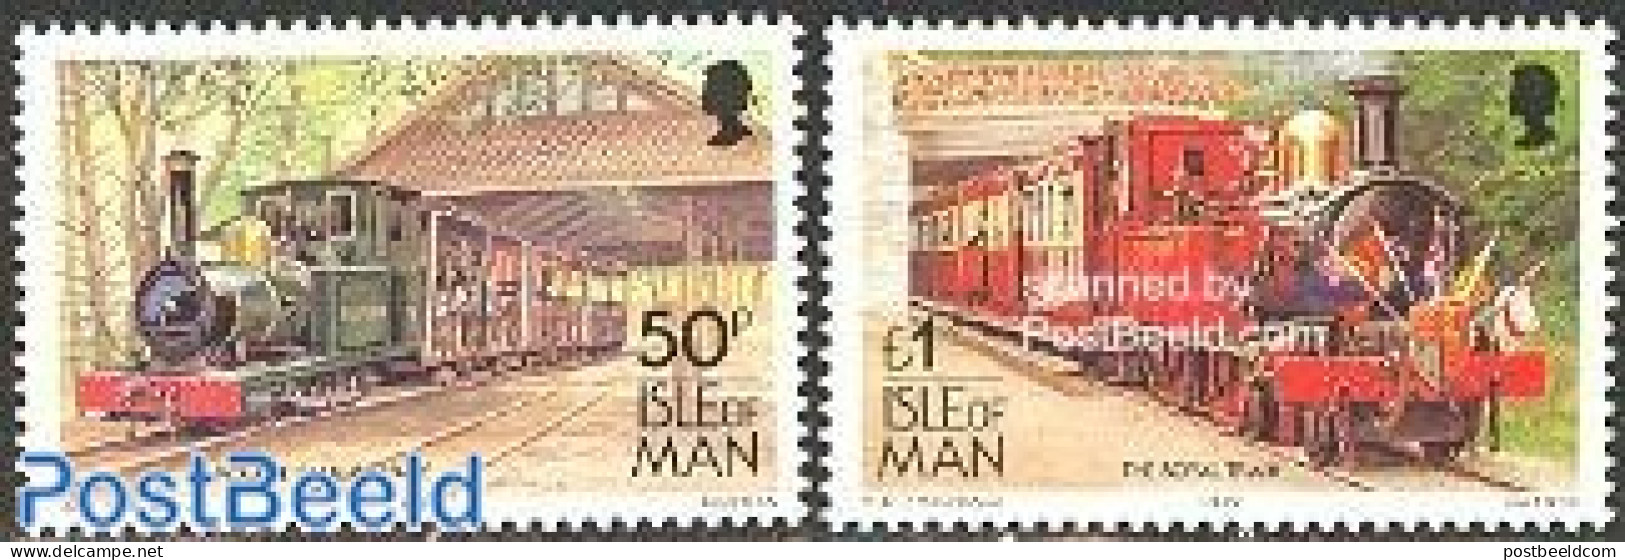 Isle Of Man 1992 Railways 2v (with Year 1992), Mint NH, Transport - Railways - Treni